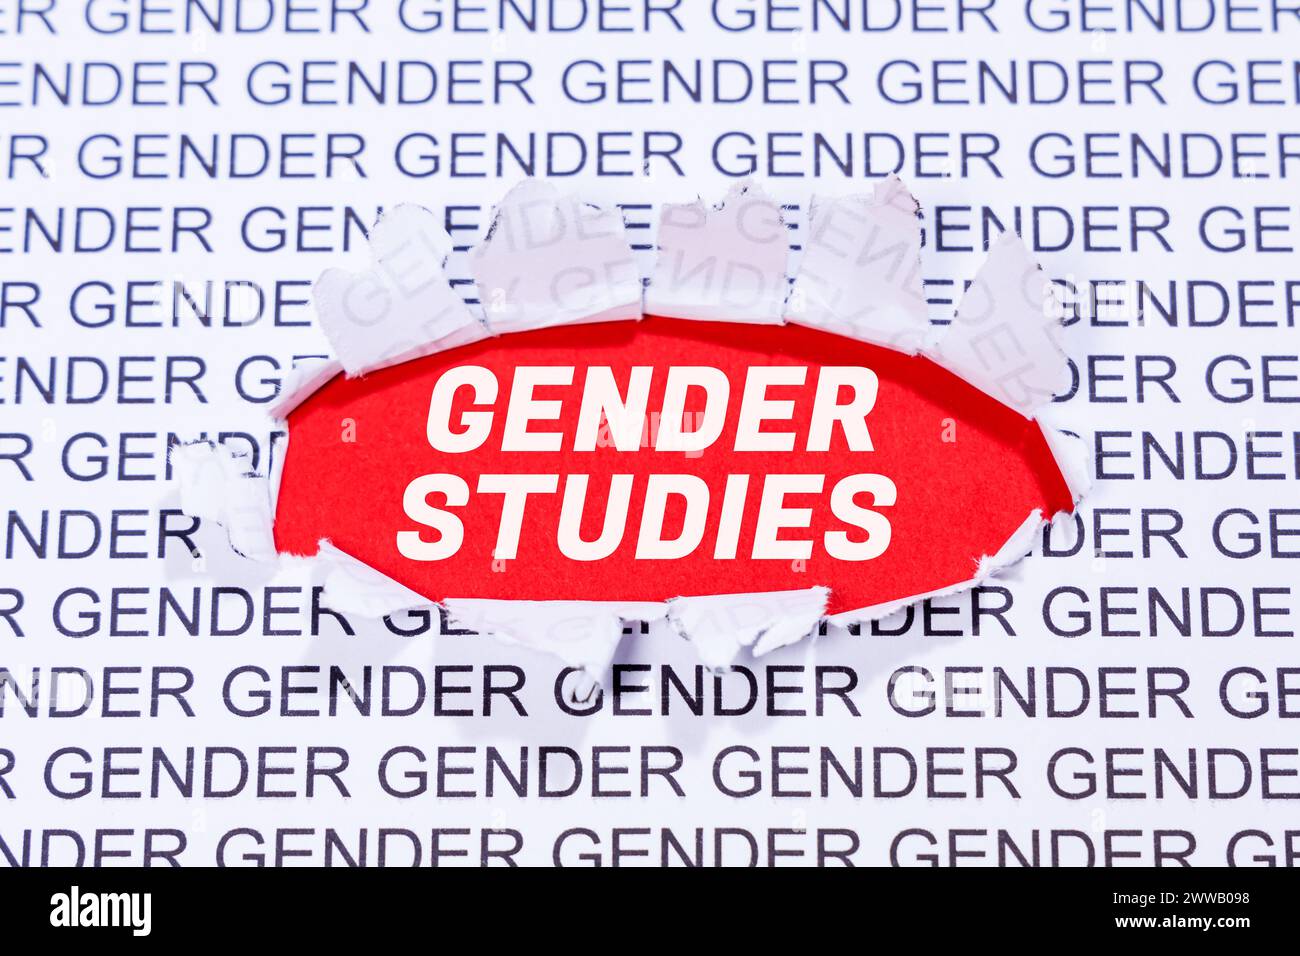 Gender Studies gender-appropriate language communication concept study Stock Photo